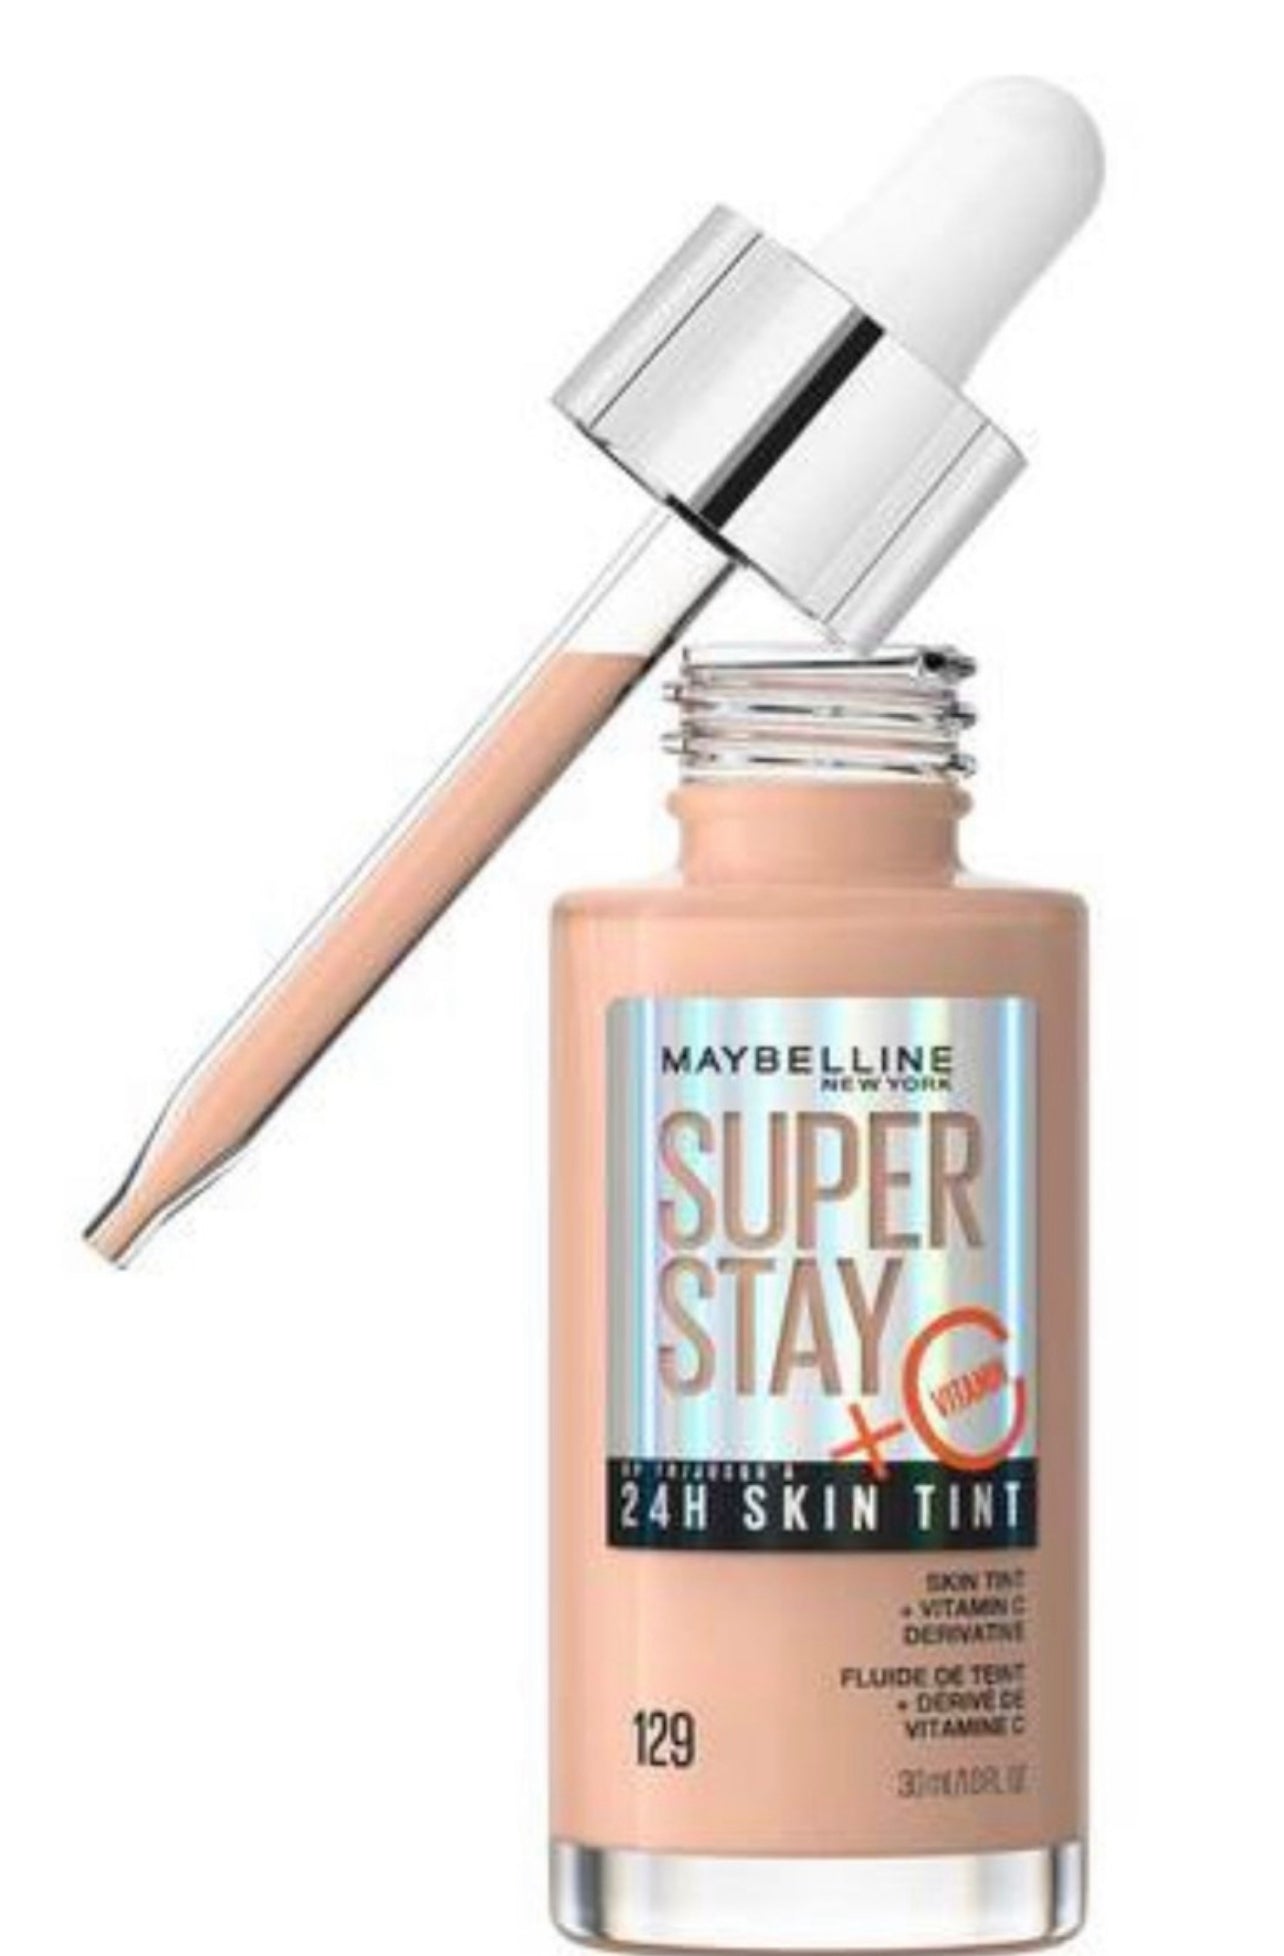 Base Super Stay 24 Horas Skin Tint Con Vitamina C